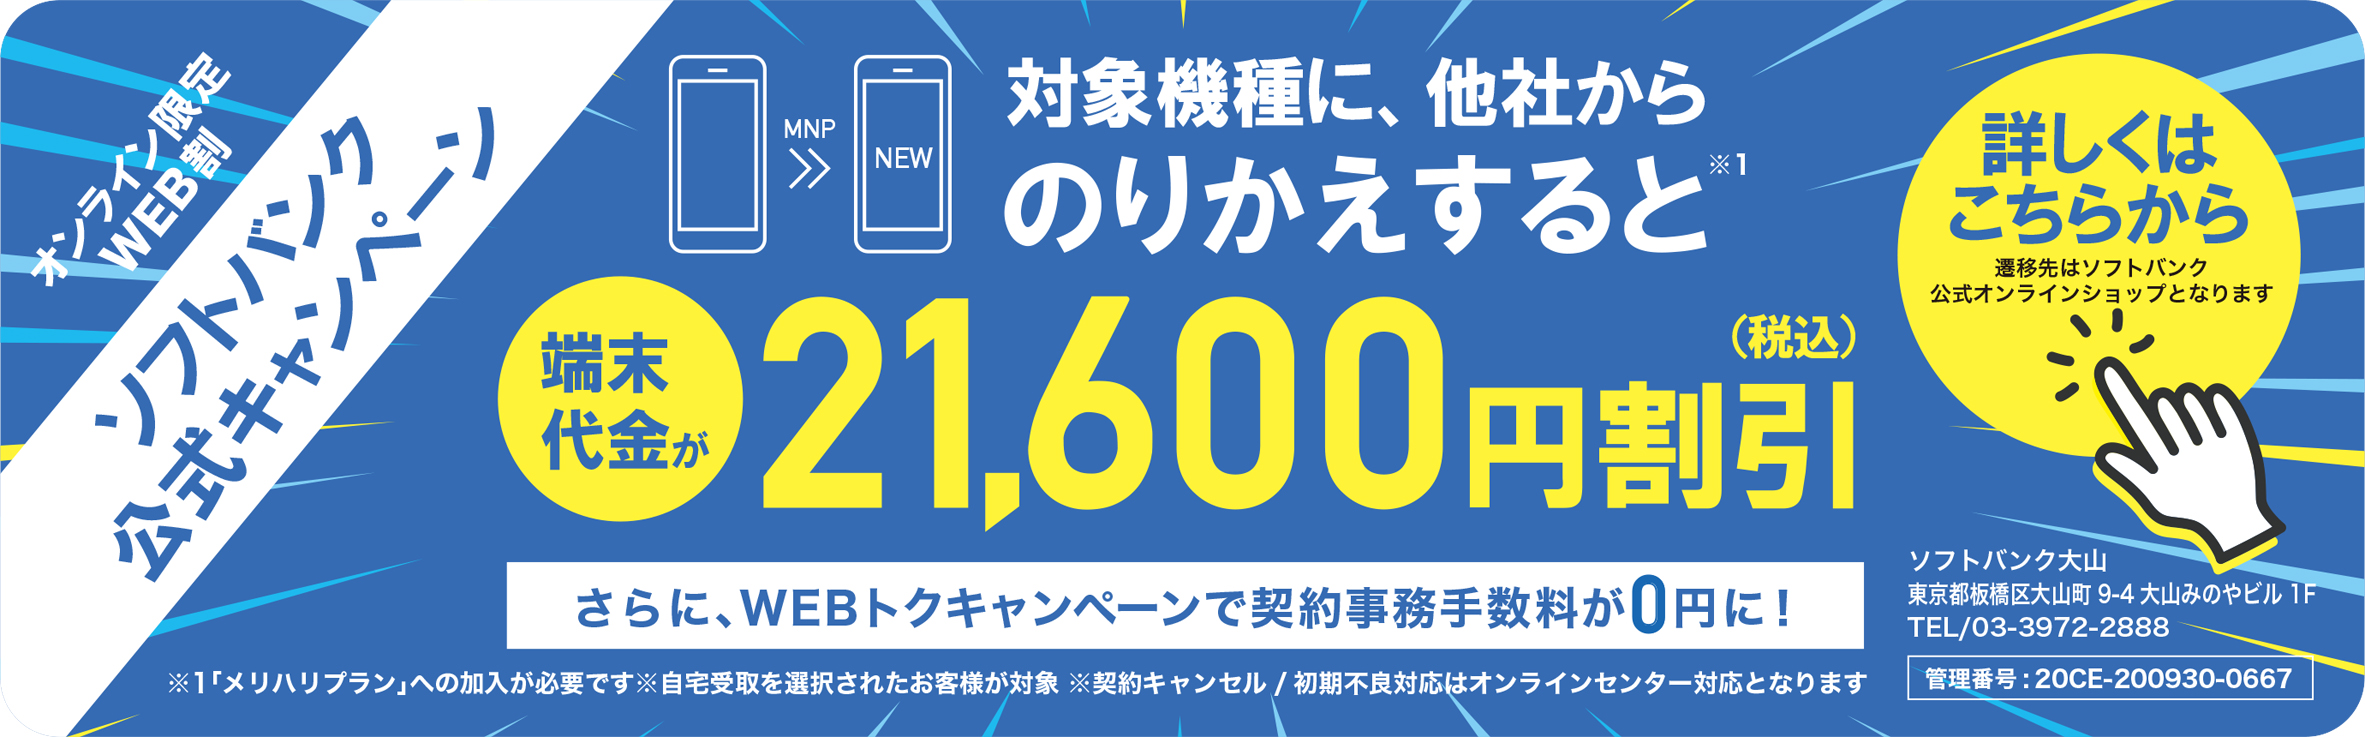 Softbank 大山 ショップ情報 Jng ジャパンネットワークグループ